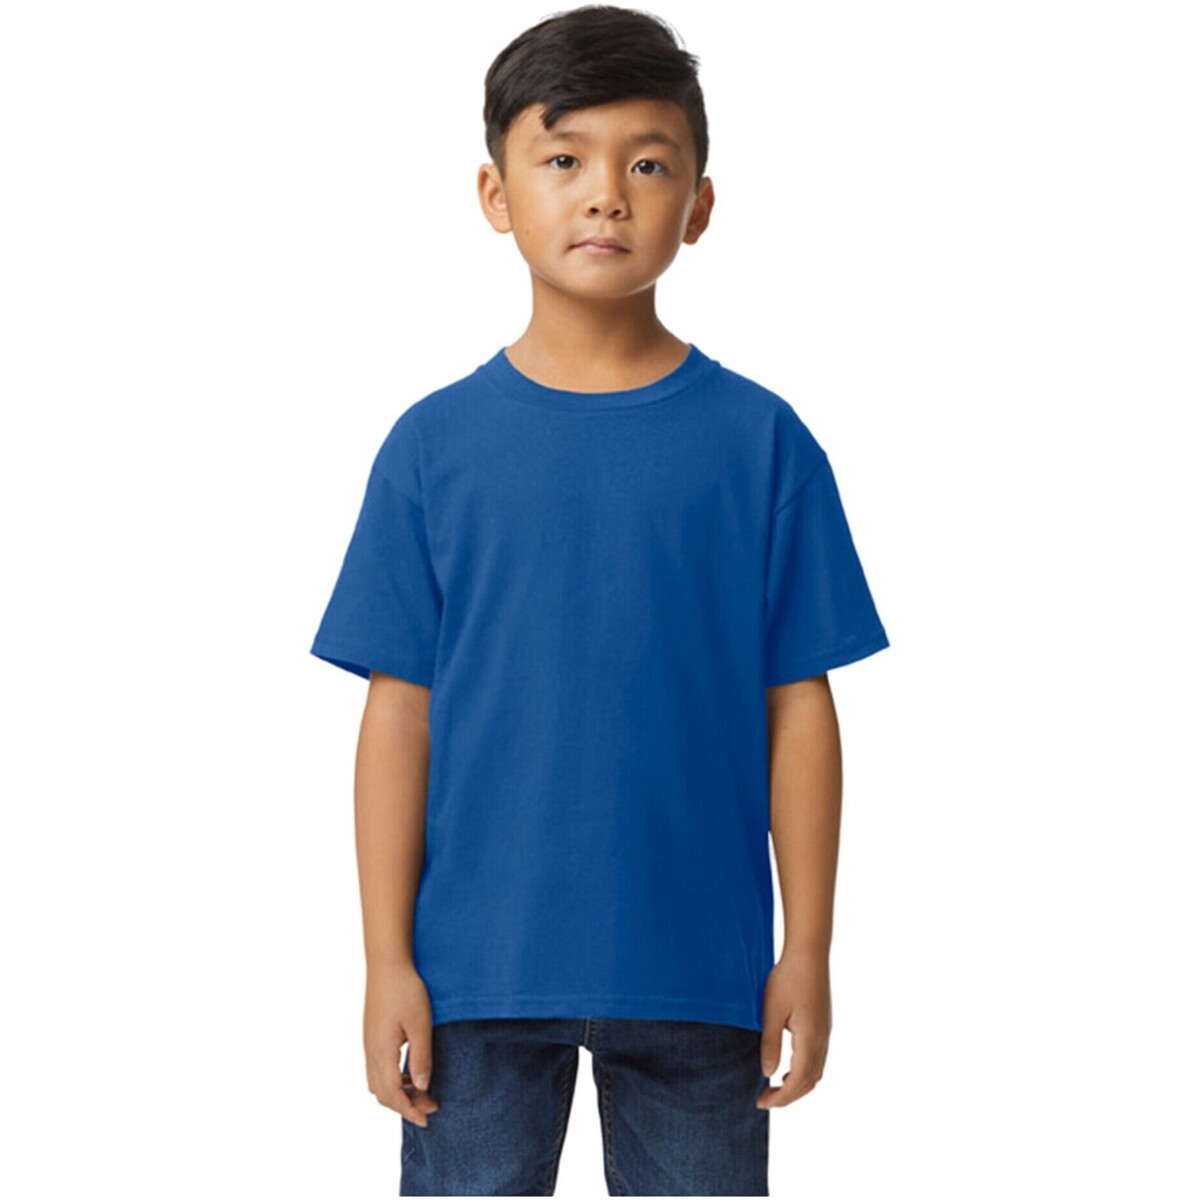 Vêtements Enfant Nike Sportswear Pant Energy Men's Pant Softstyle Bleu